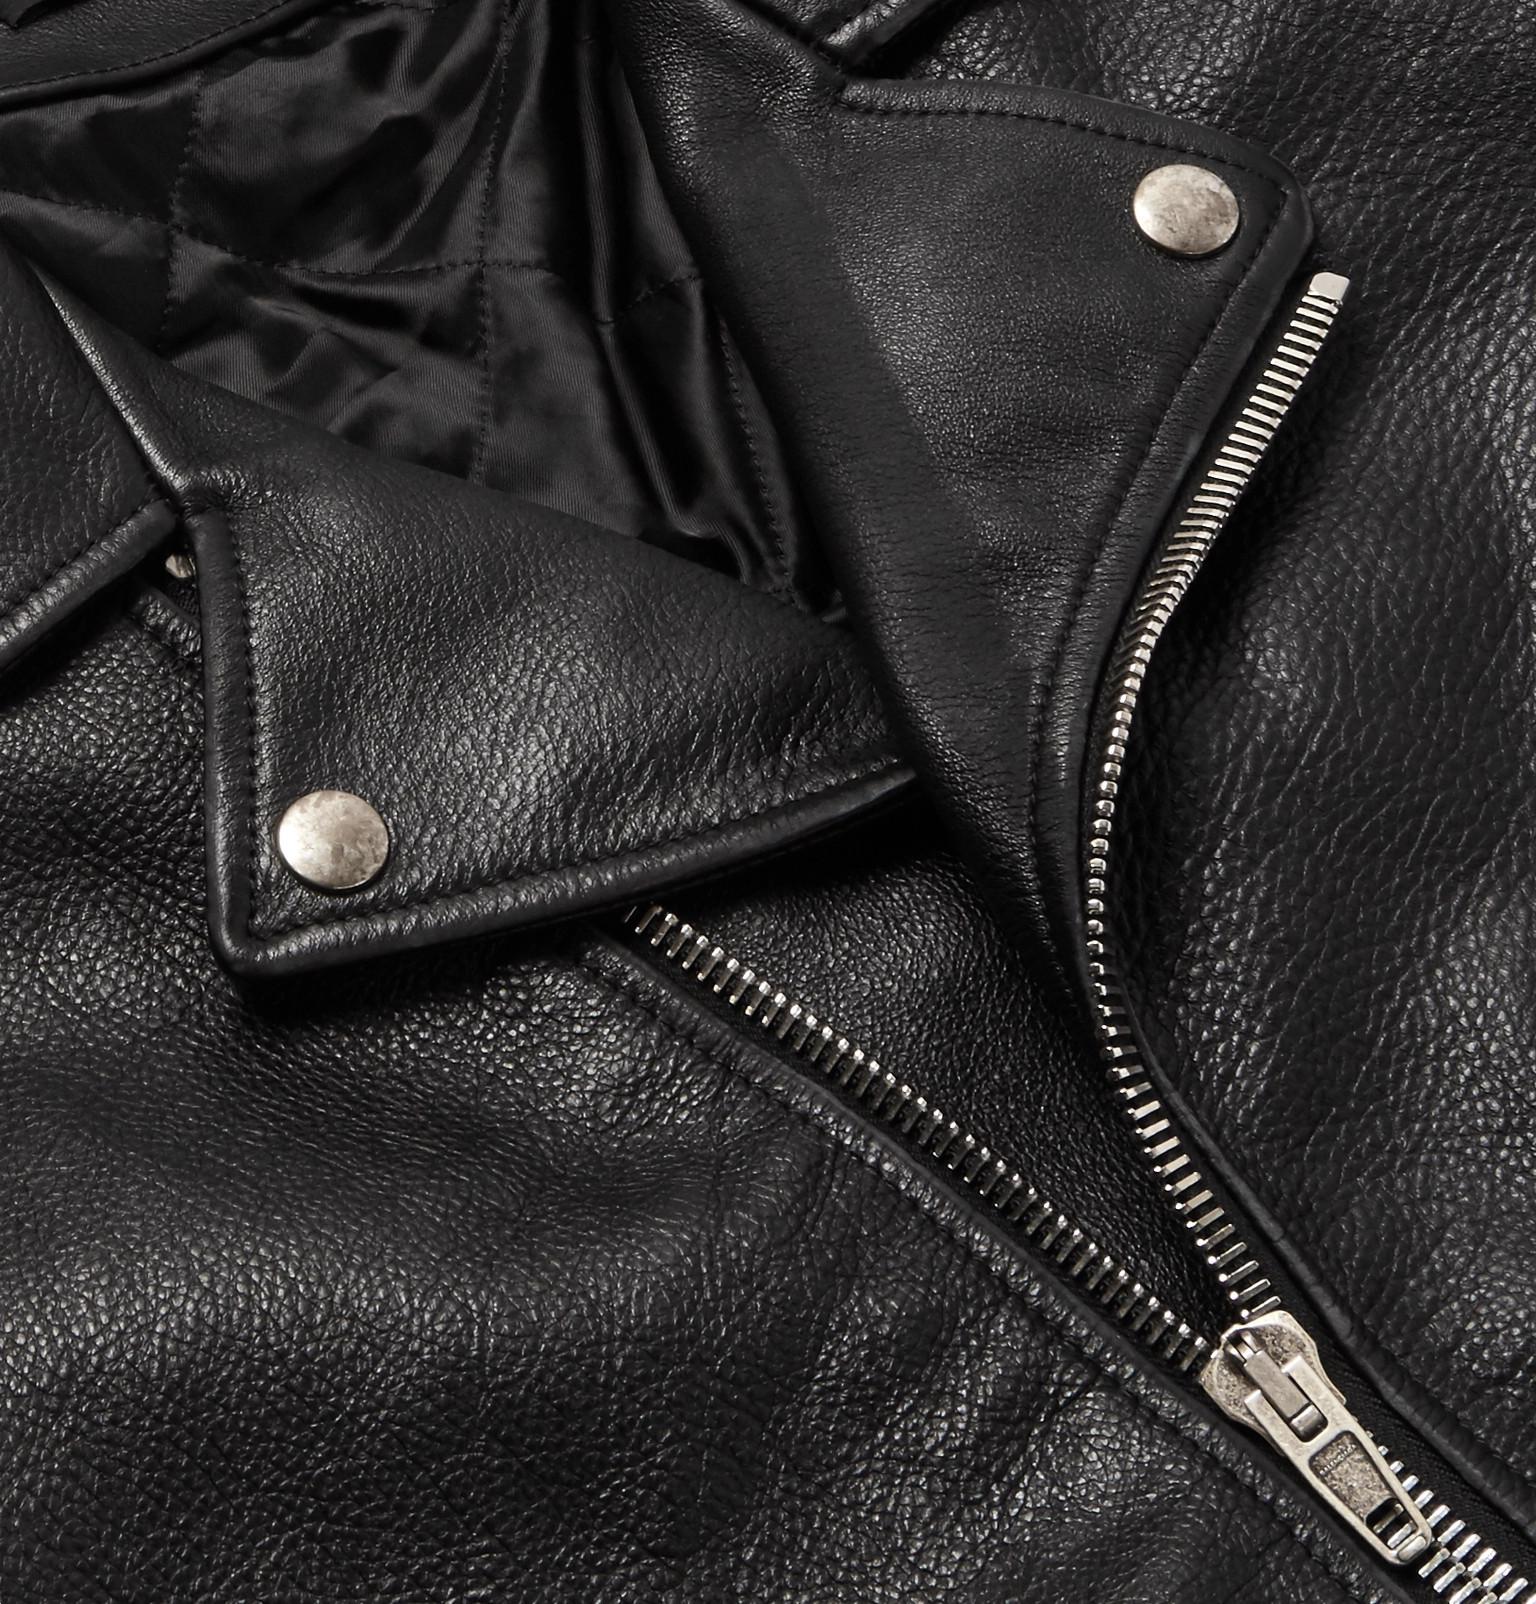 Balenciaga Printed Leather Biker Jacket in Black for Men - Lyst